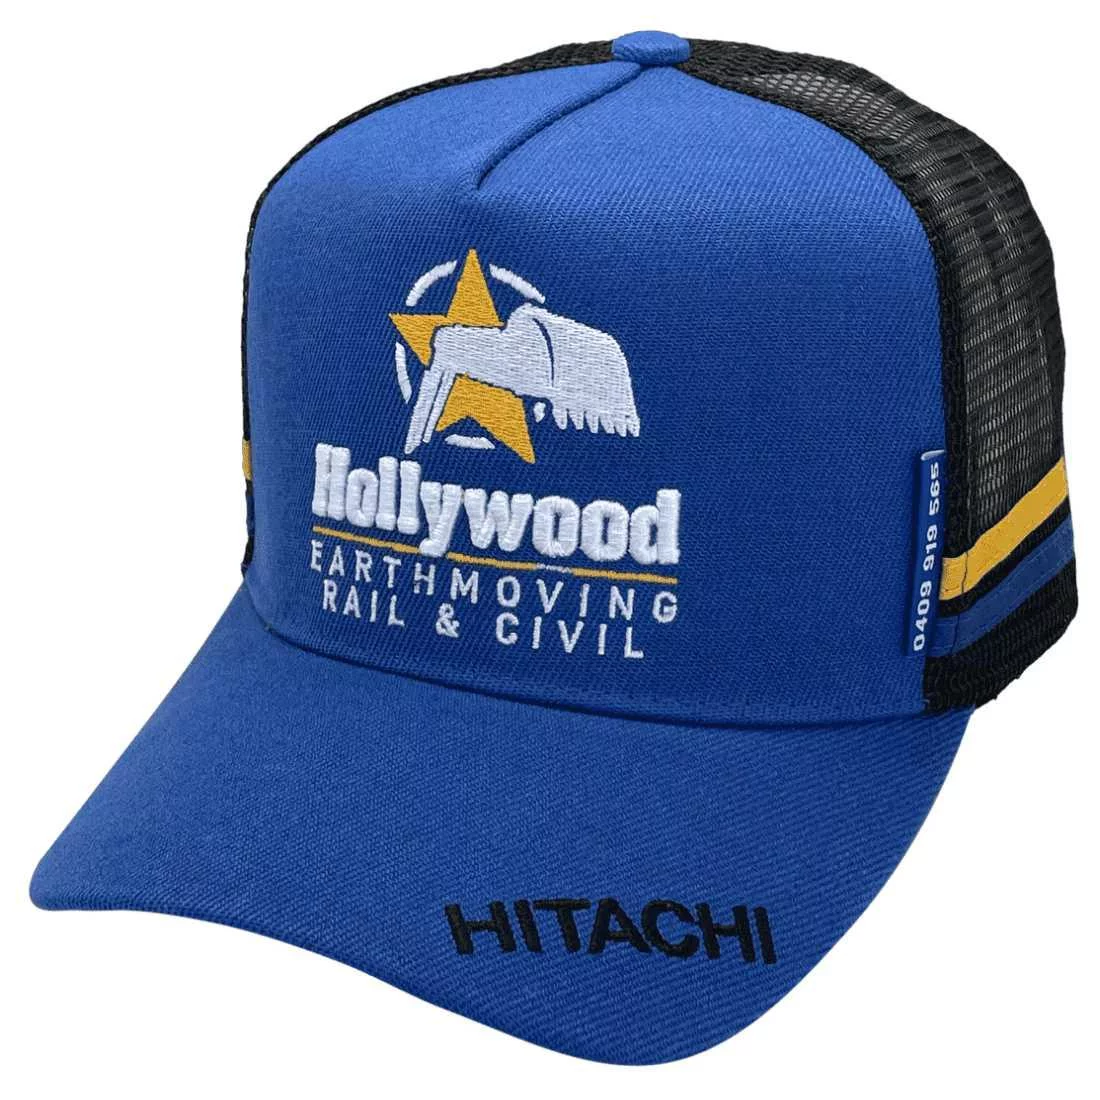 Hollywood Earthmoving Rail & Civil Midrange Aussie Trucker Hats